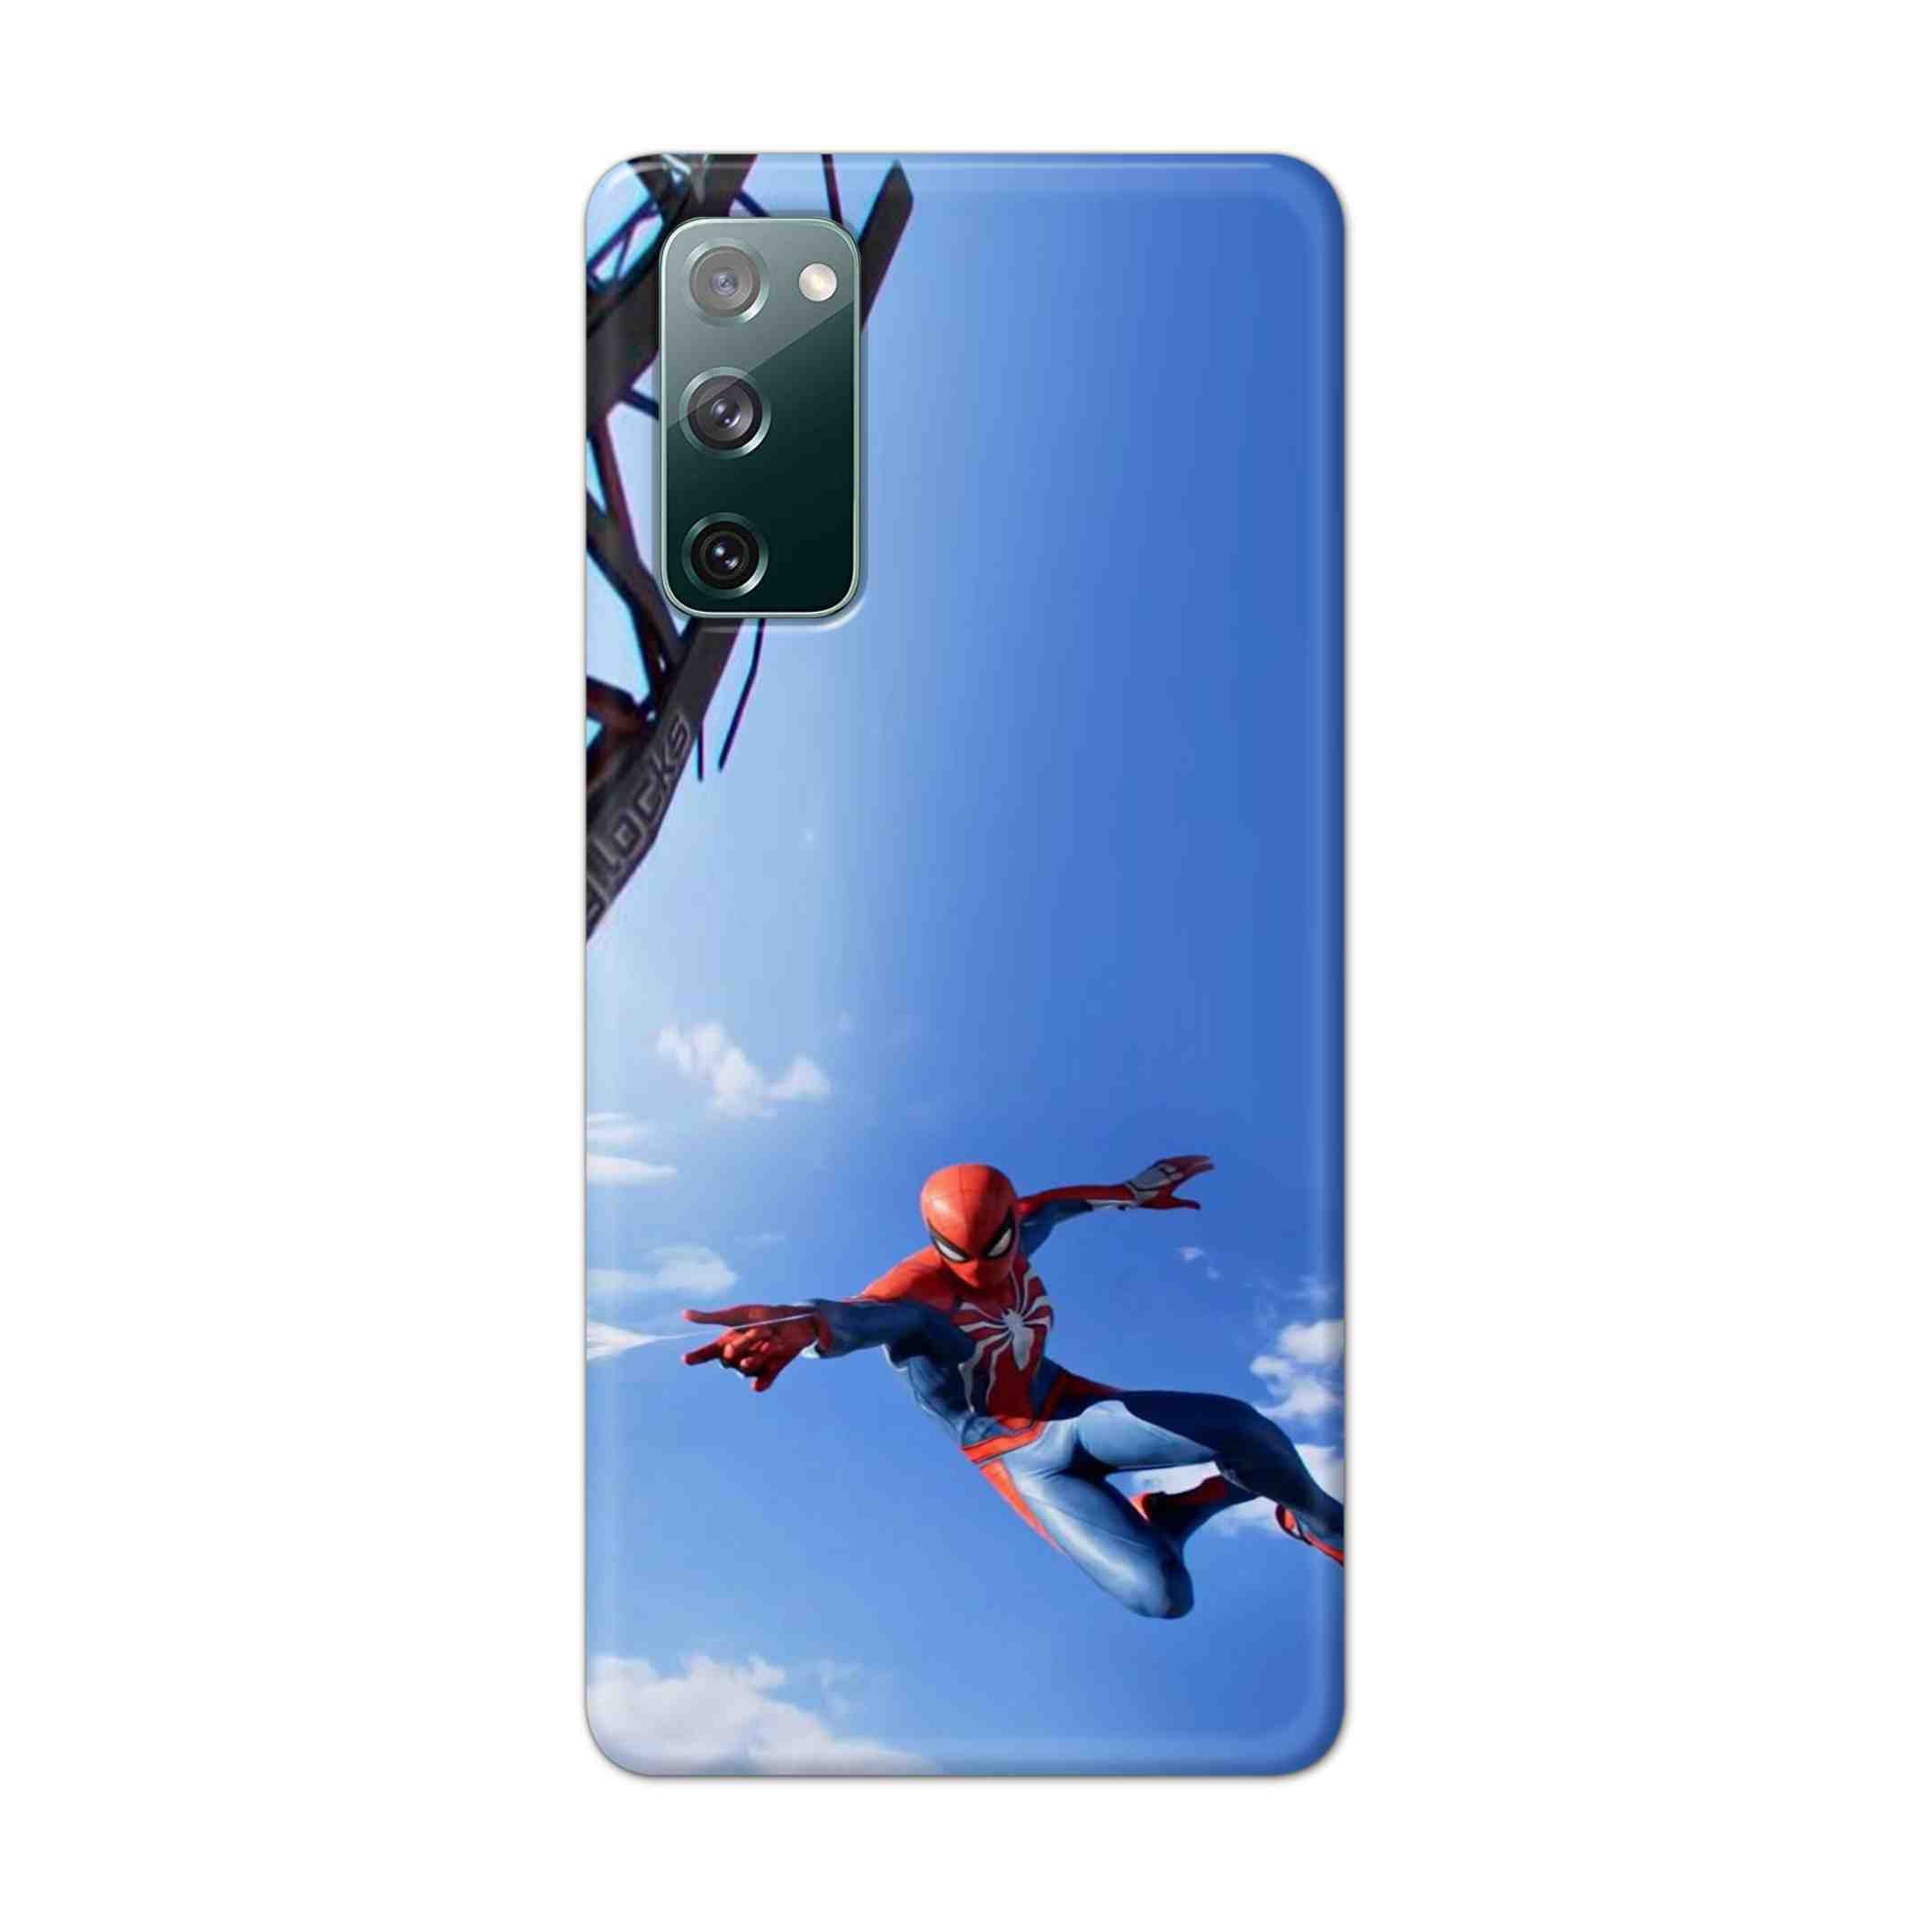 Buy Marvel Studio Spiderman Hard Back Mobile Phone Case Cover For Samsung Galaxy S20 FE Online